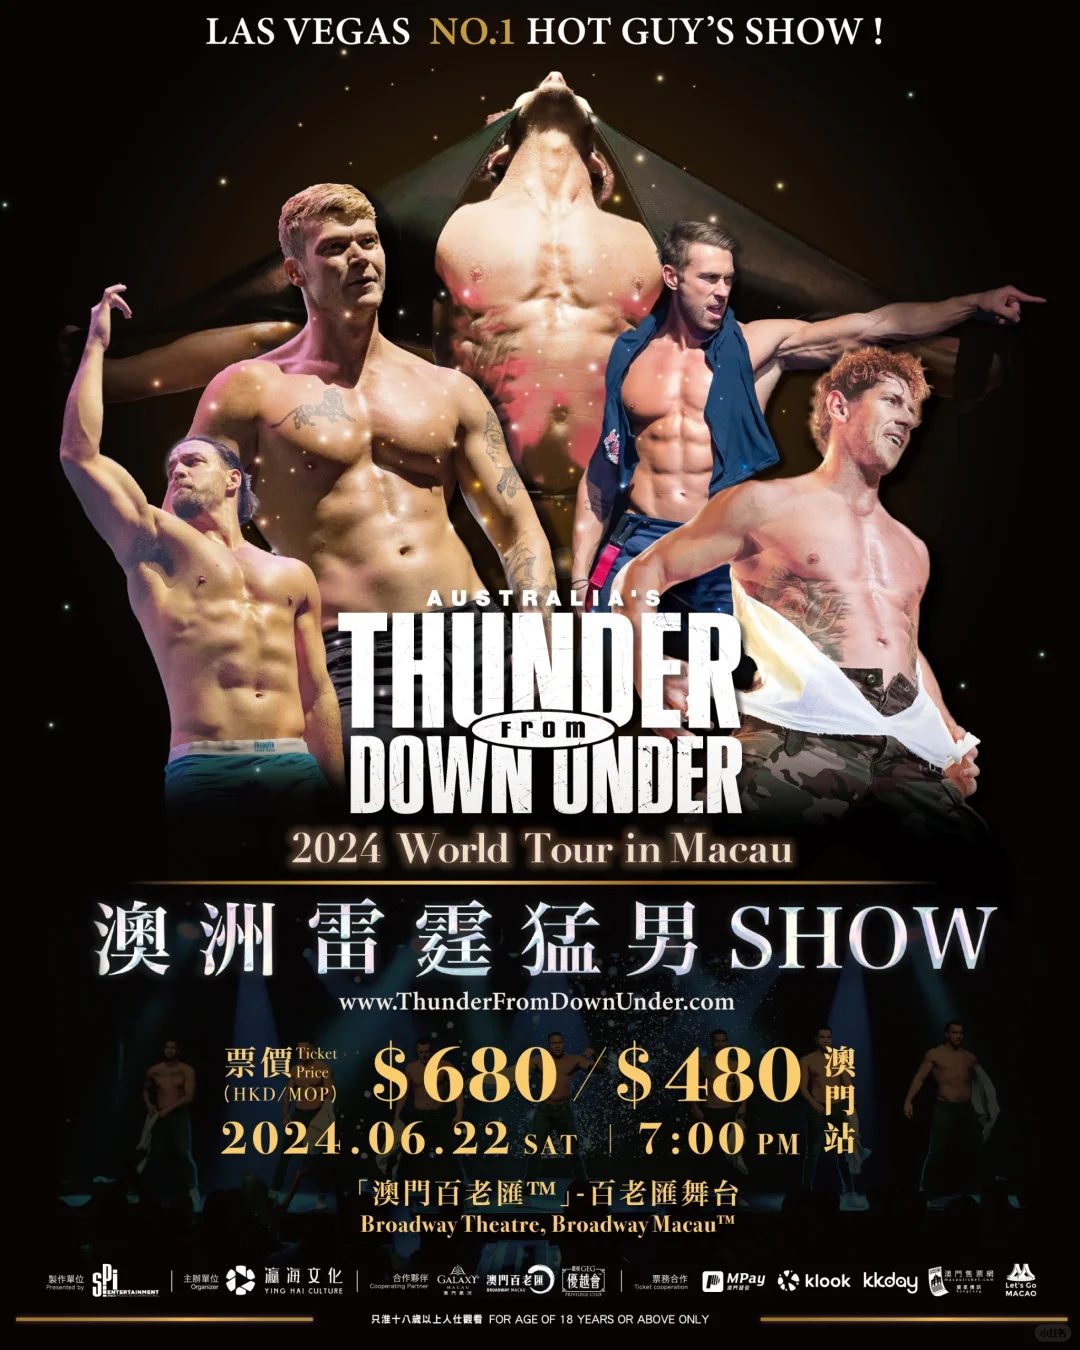 Macao-Broadway Macau is super hot, the Australian Thunder Man Show is super crazy